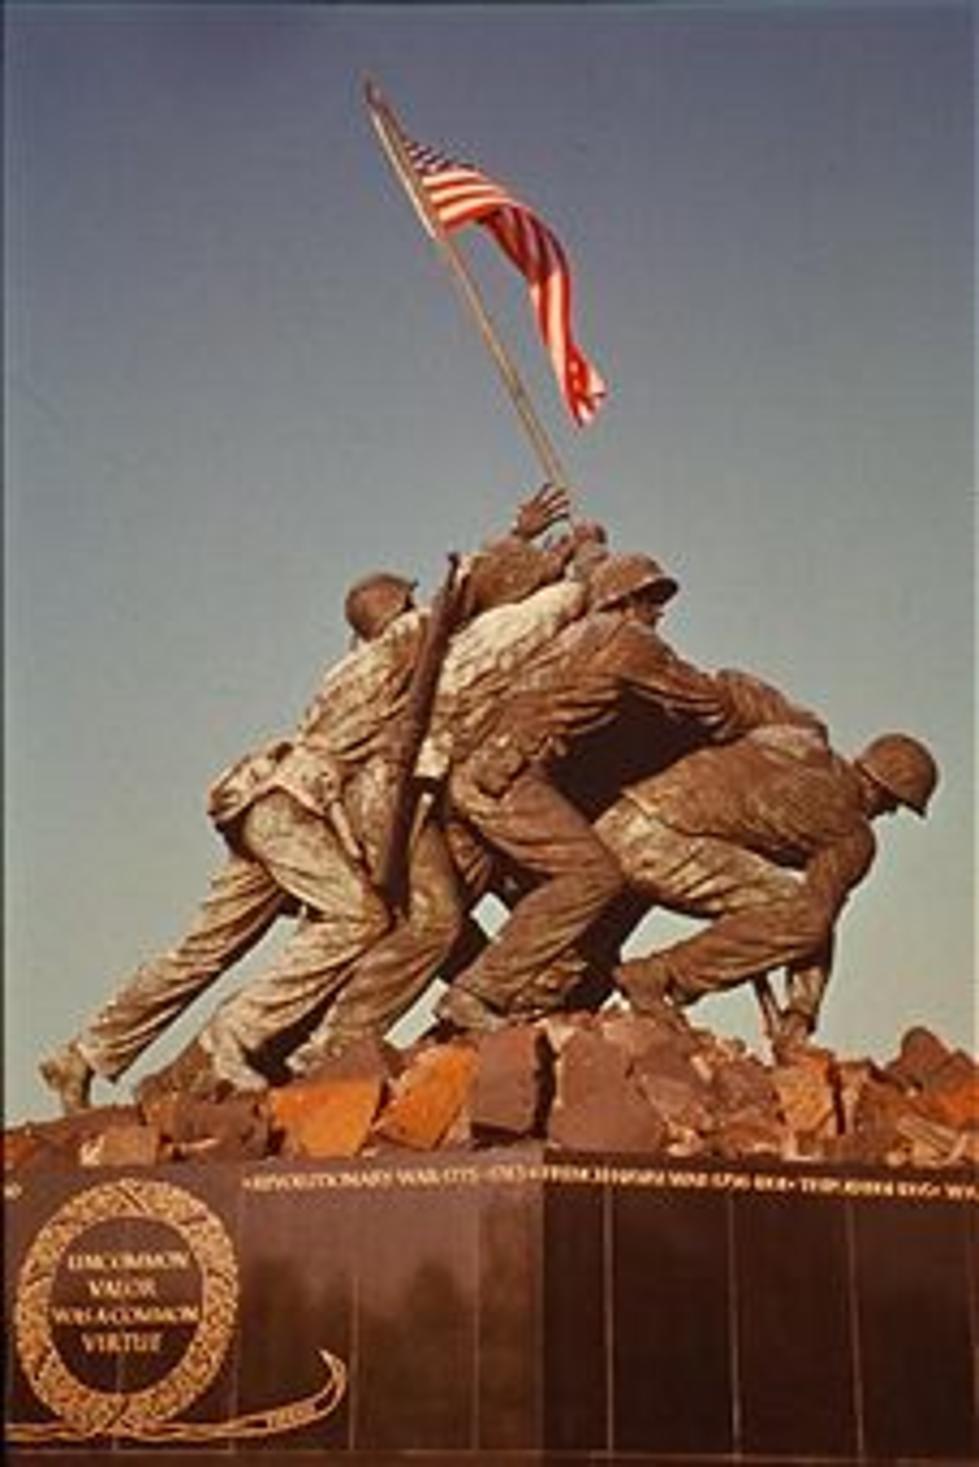 WBKR Salutes All Veterans &#8212; Veteran&#8217;s Day is Tomorrow